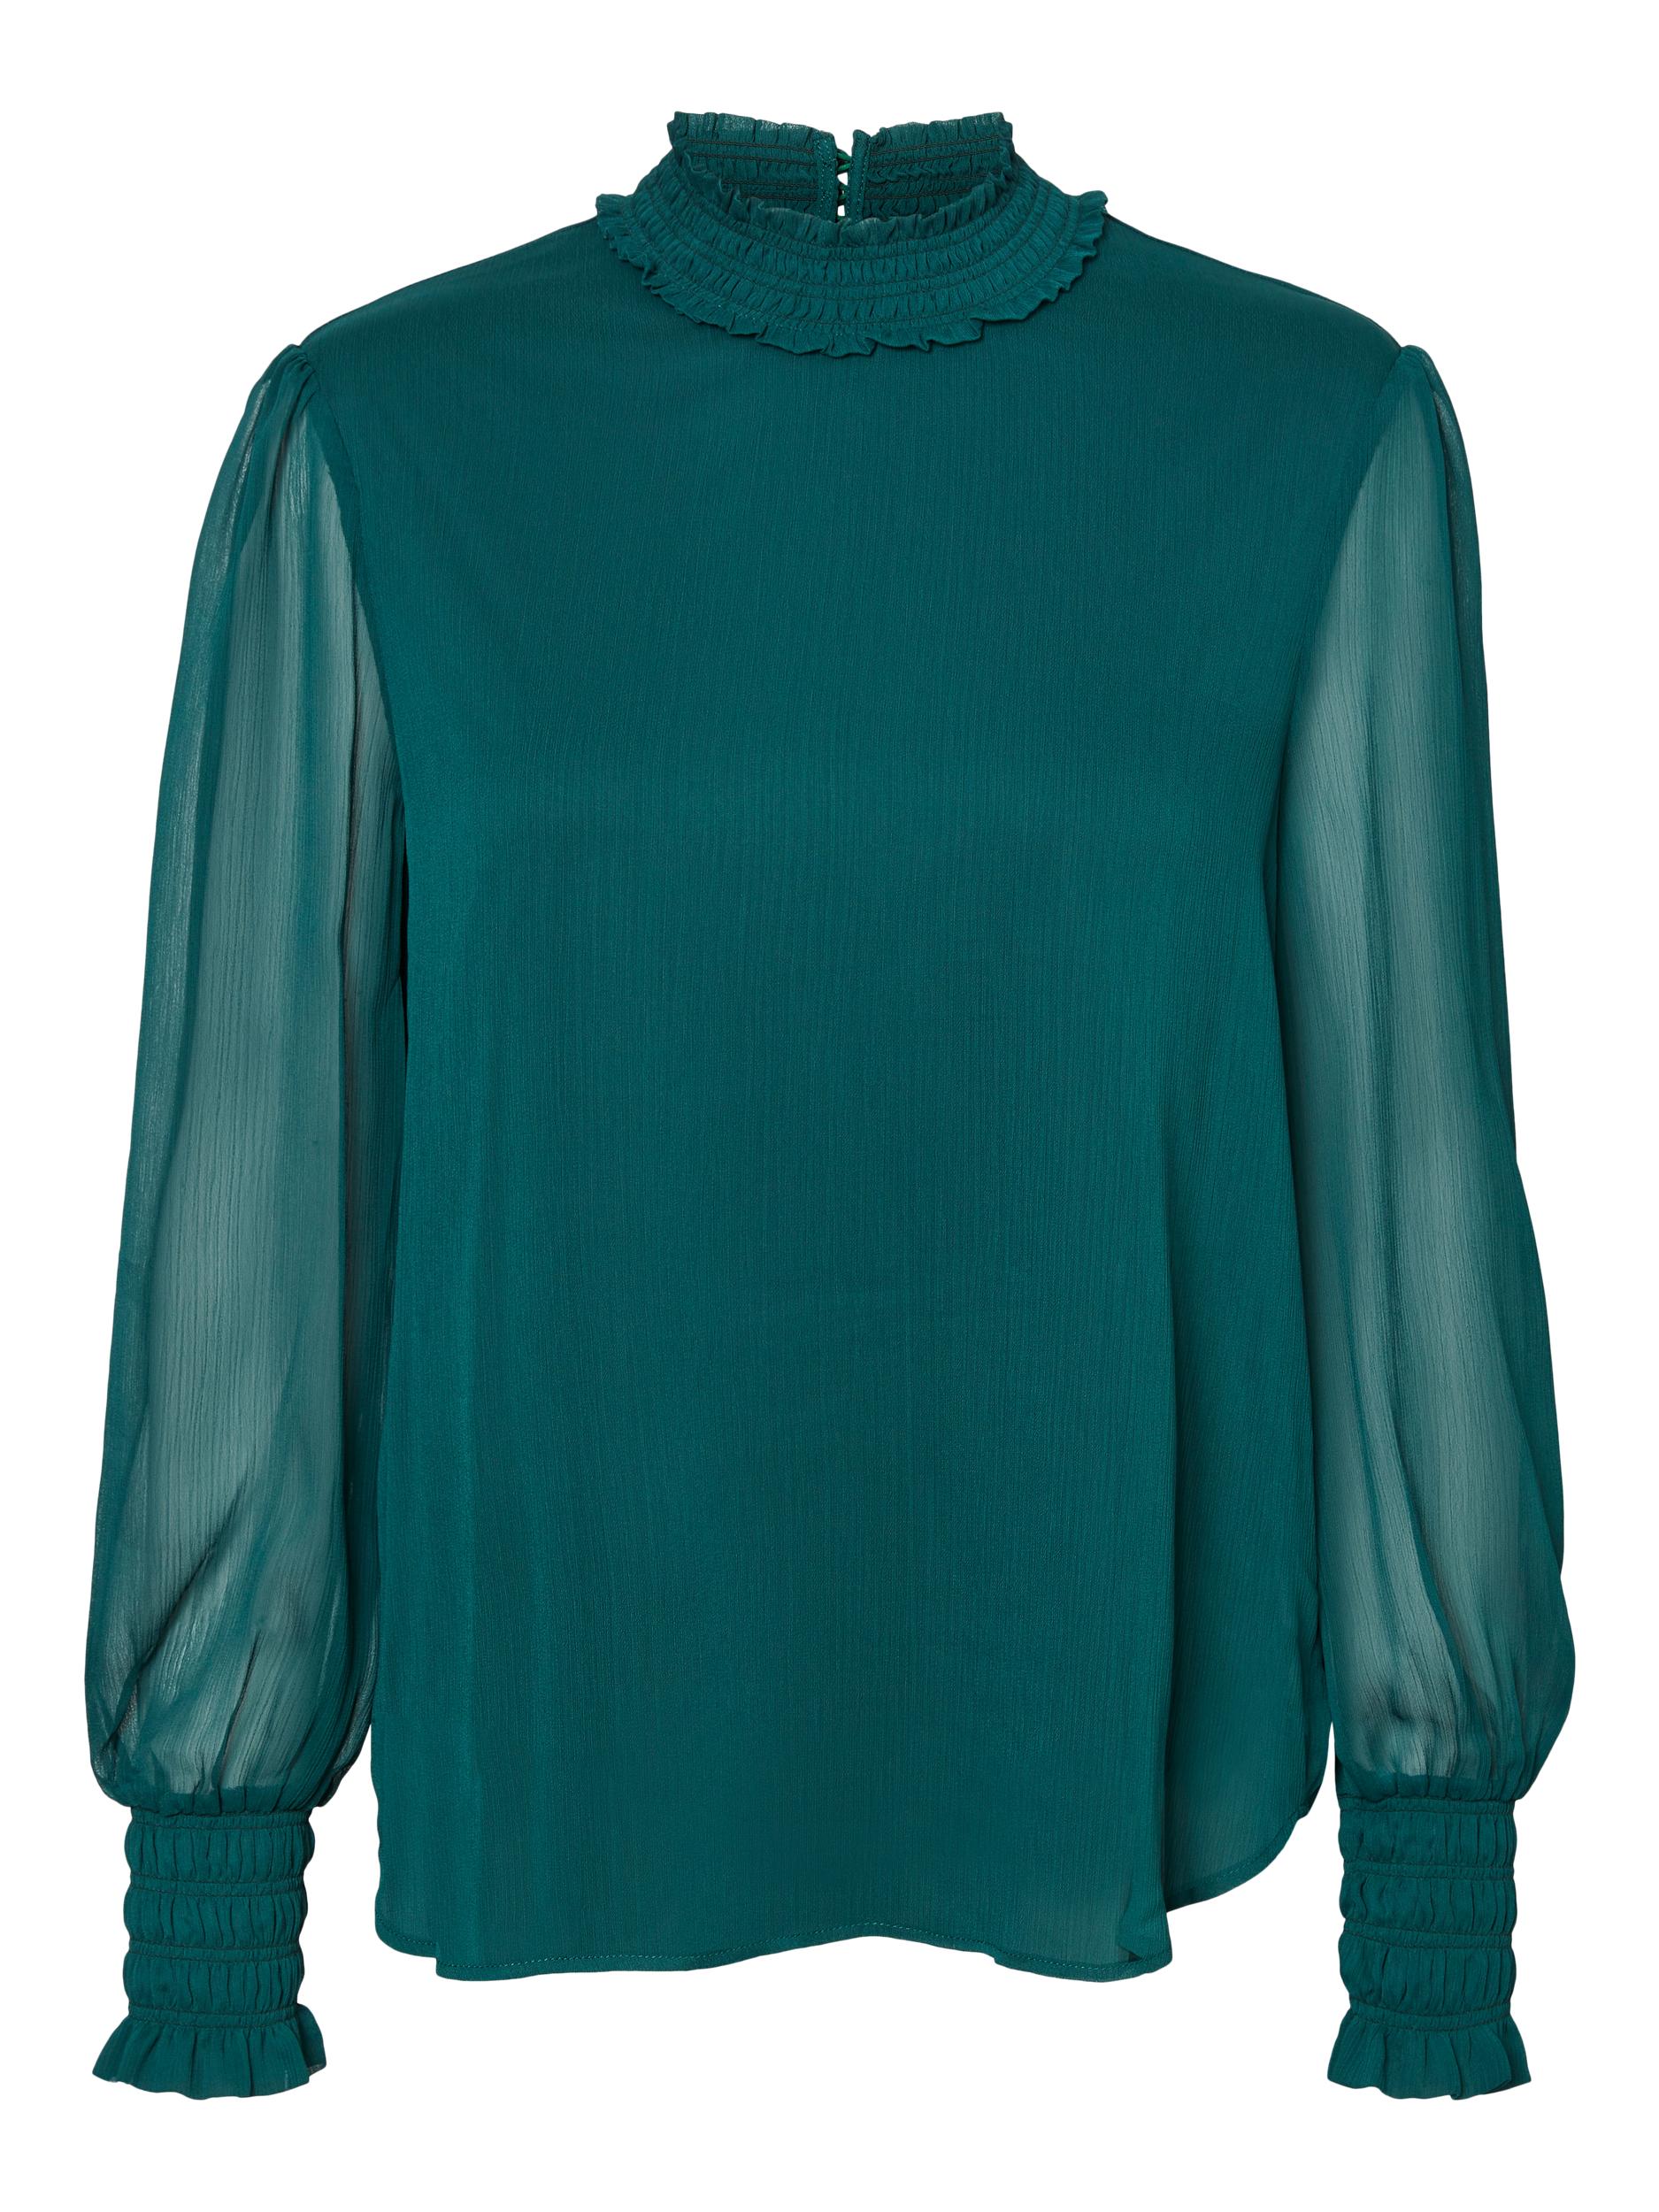 FINAL SALE - Milla high neck blouse, SEA MOSS, large